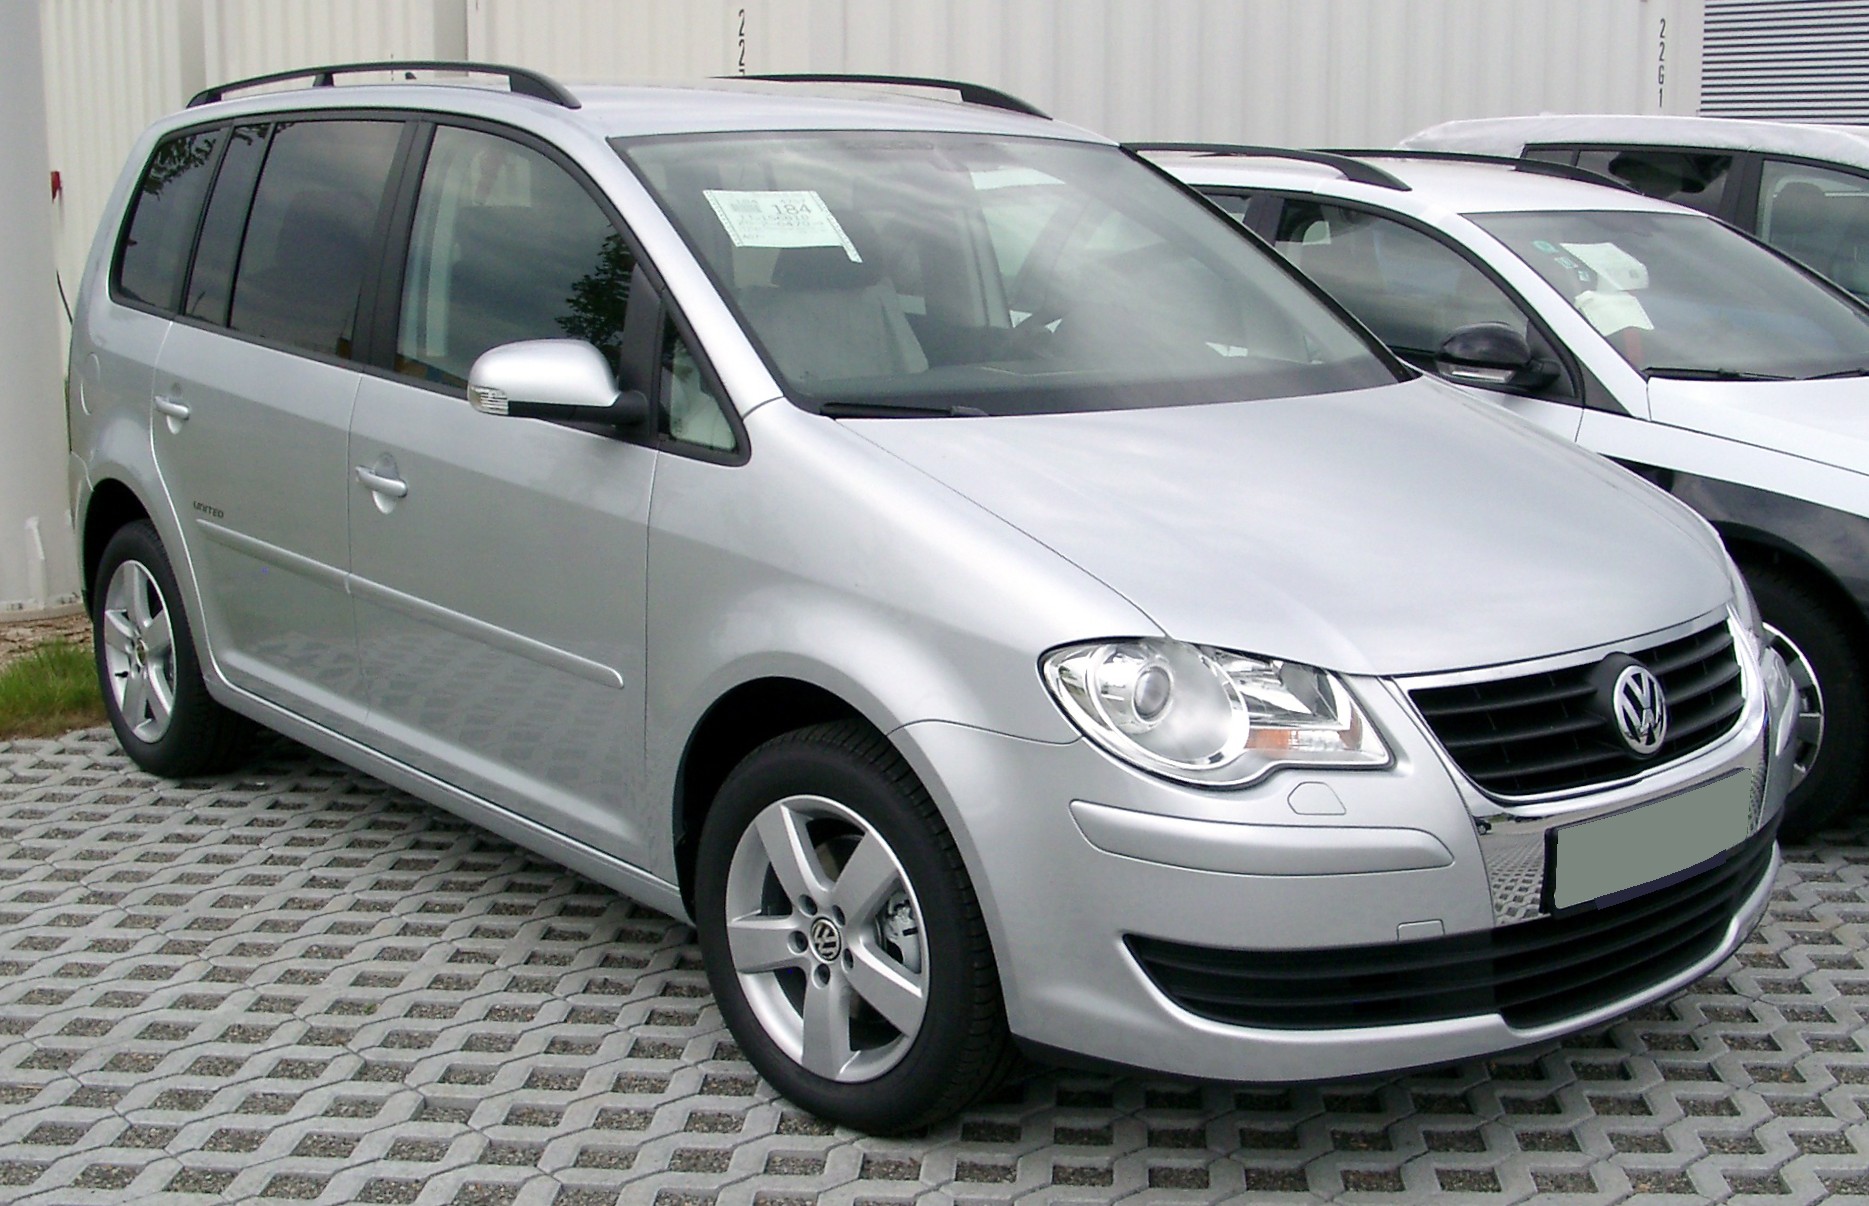 Volkswagen Touran - Wikipedia